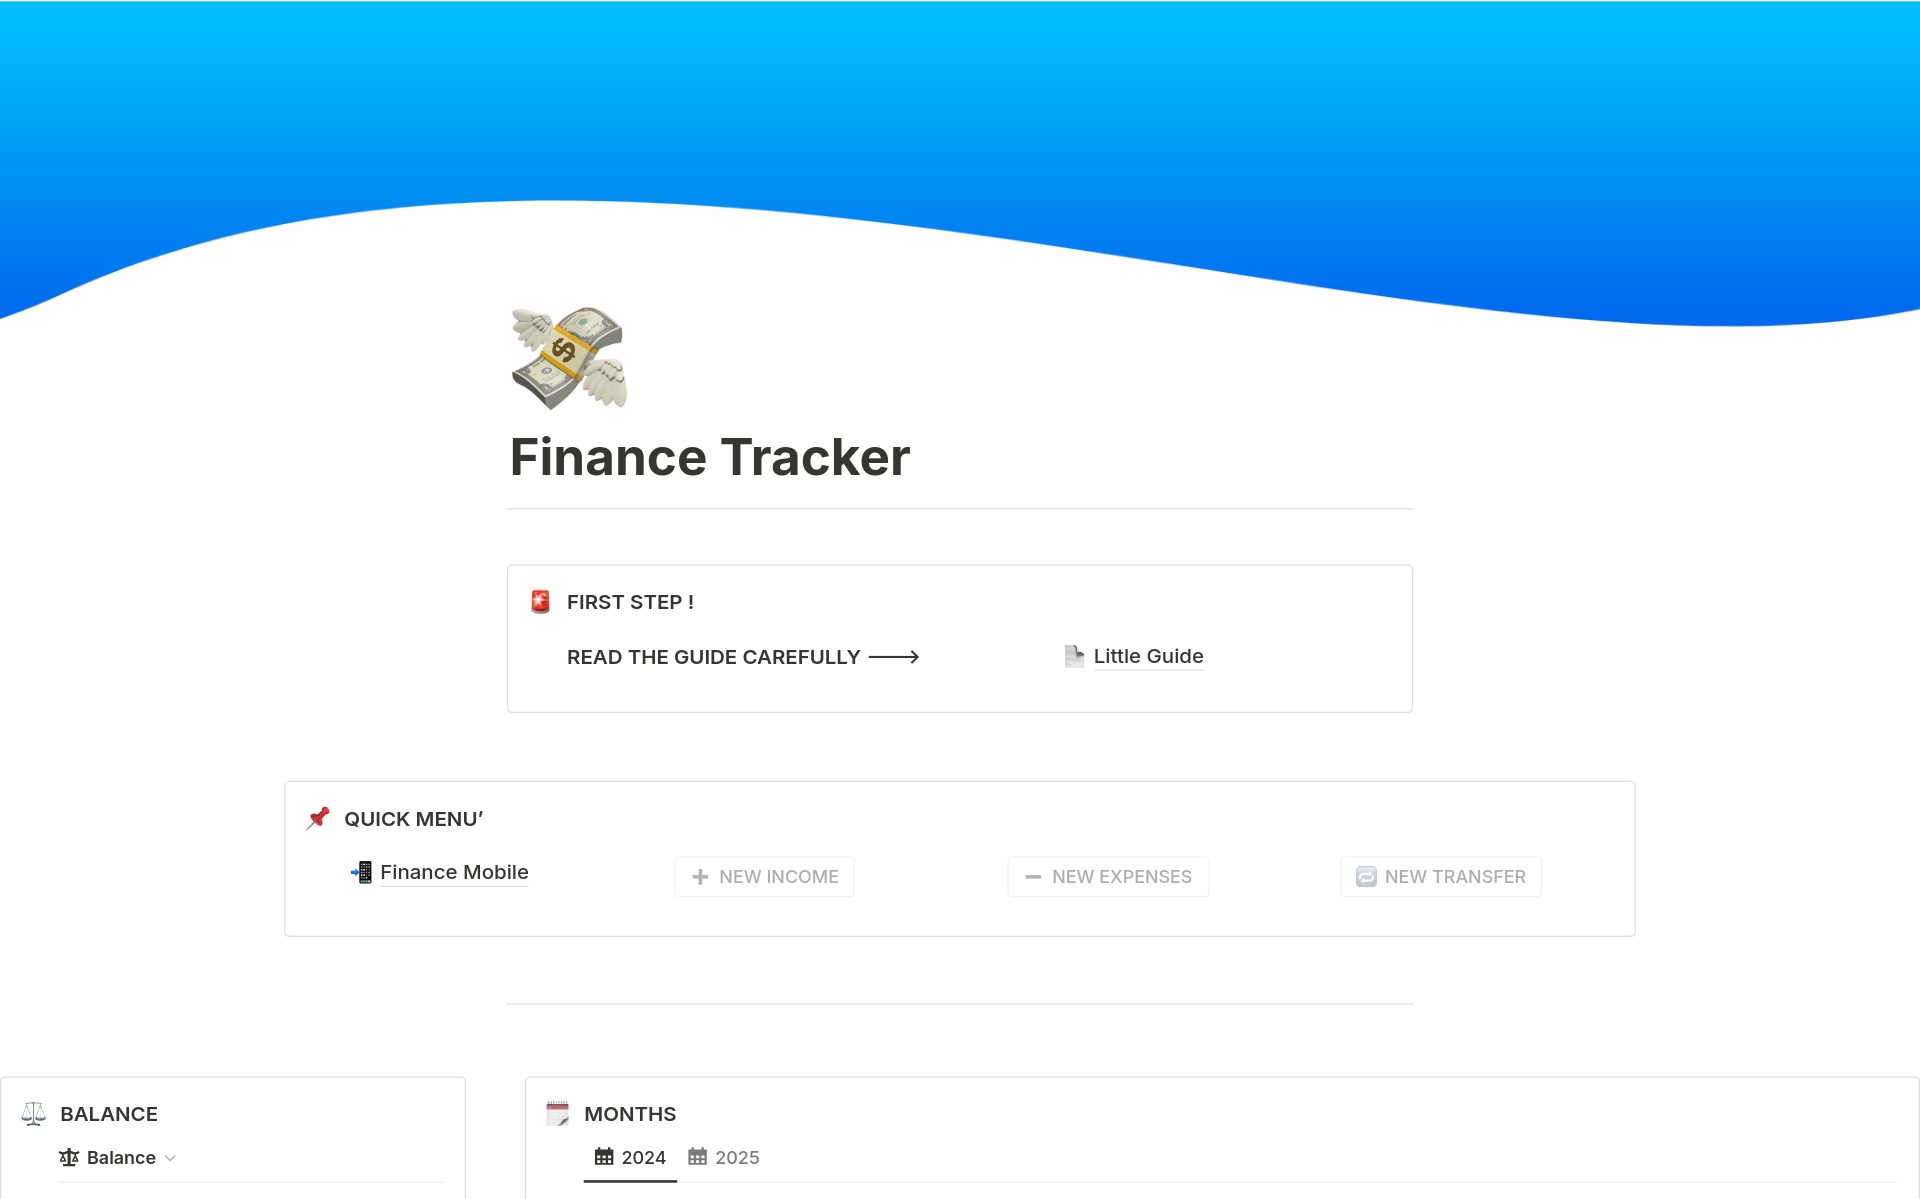 Vista previa de plantilla para Complete Finance Tracker